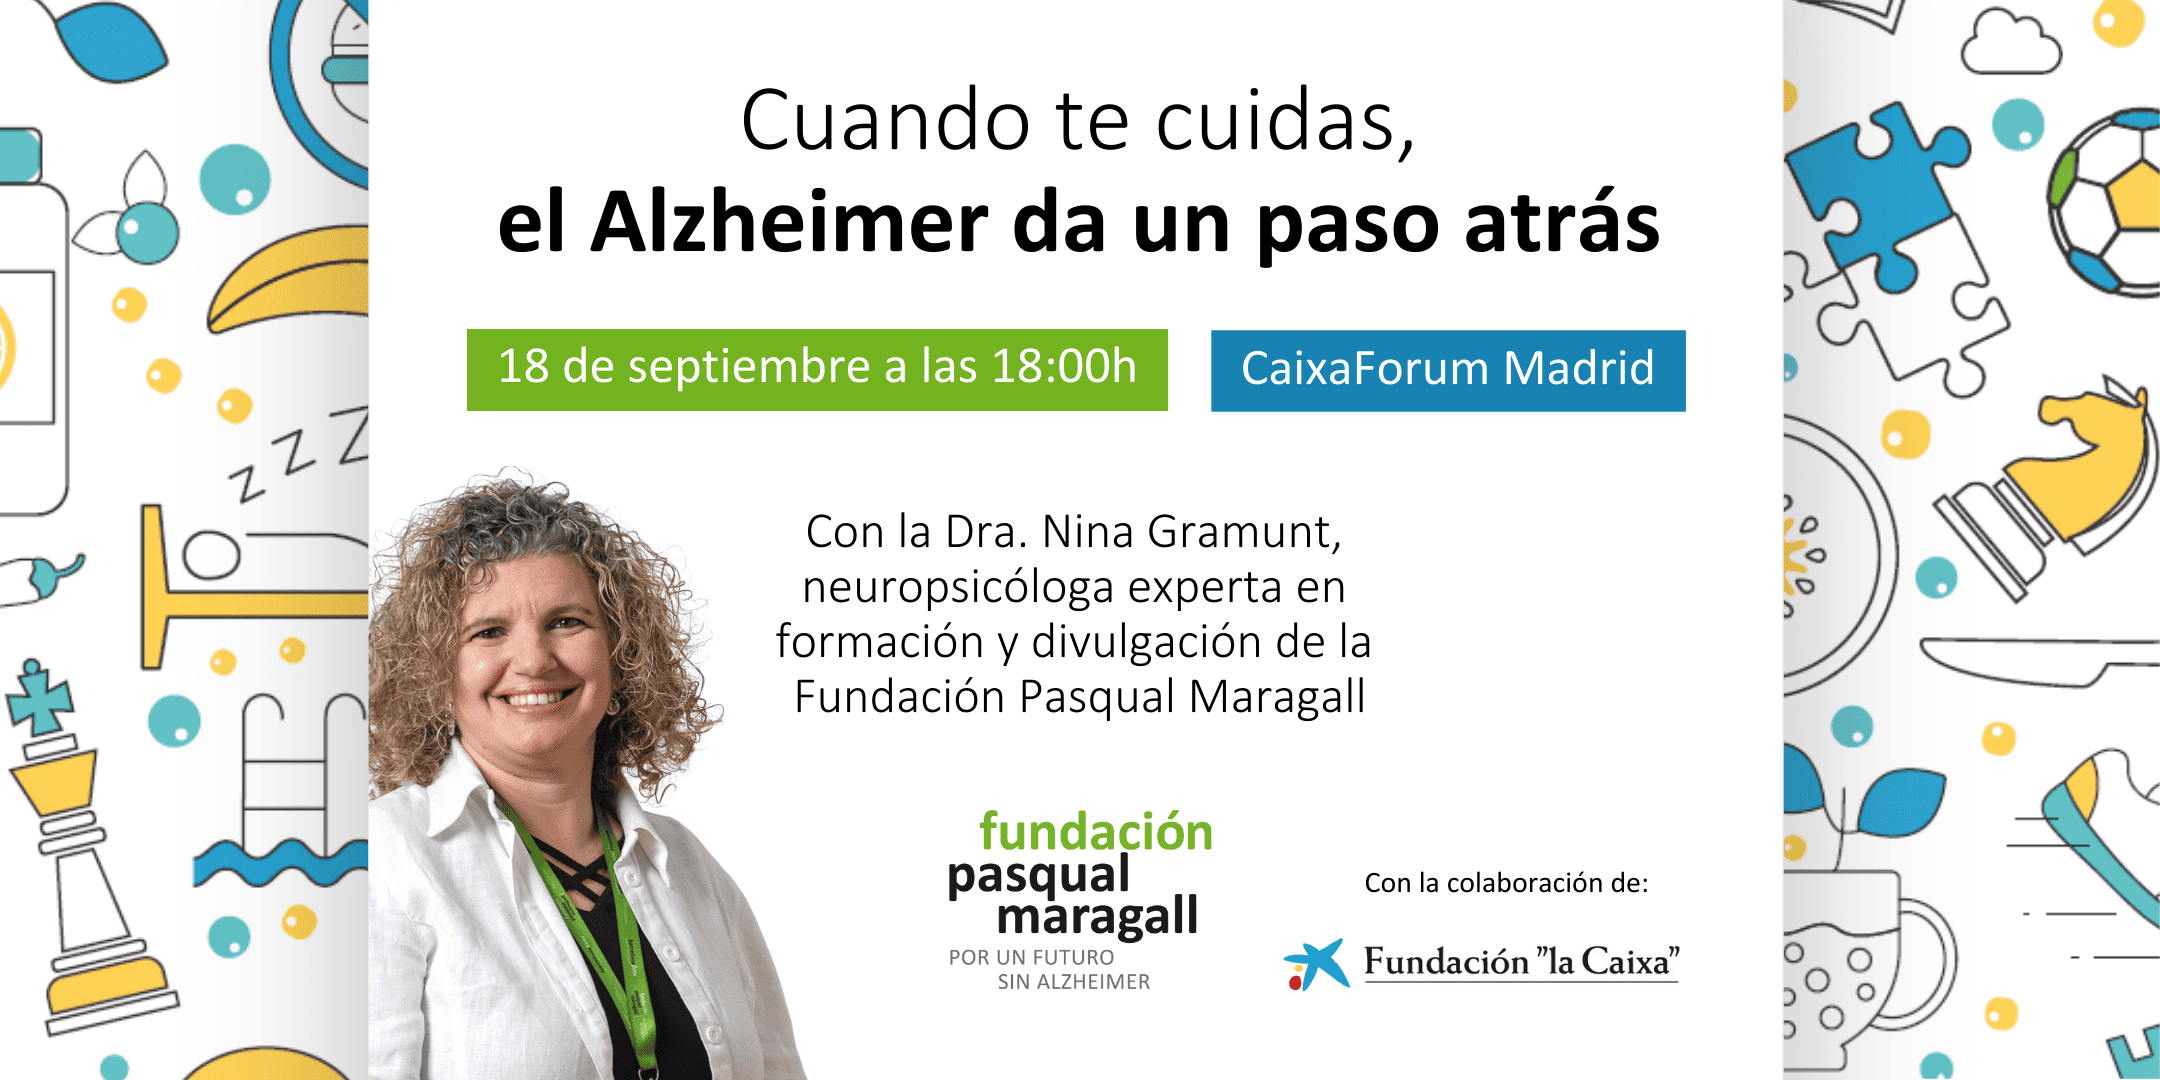 Conferència “Cuando te cuidas el Alzheimer da un paso atrás” a Madrid